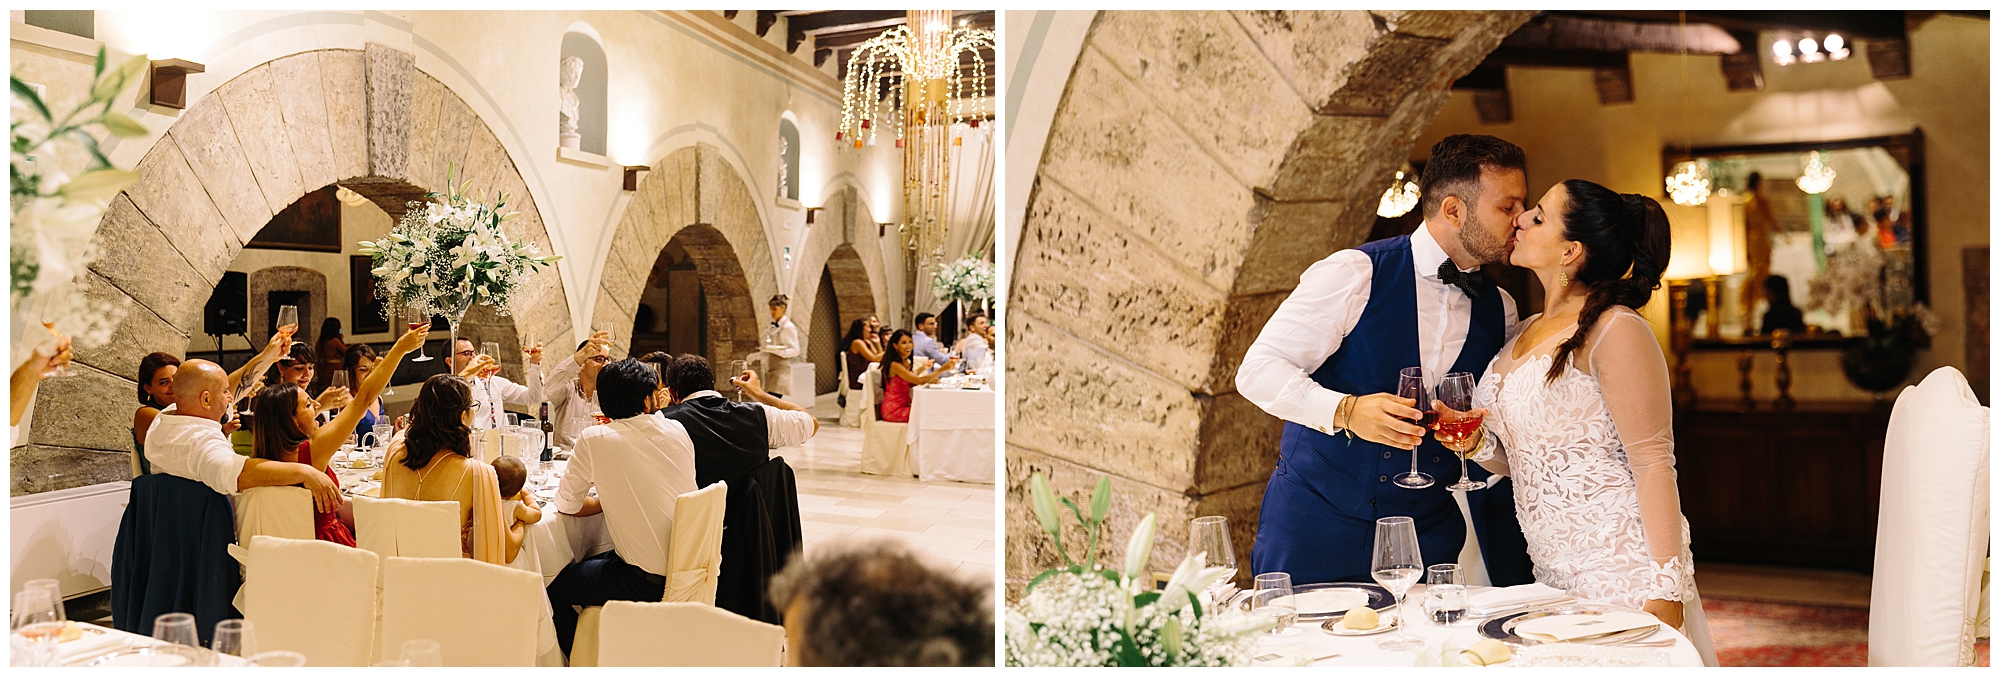 KrystaNormanPhoto_Castello_Monaci_Puglia_Italy_Destination_Wedding_Photographer_Krysta_Norman__0070.jpg